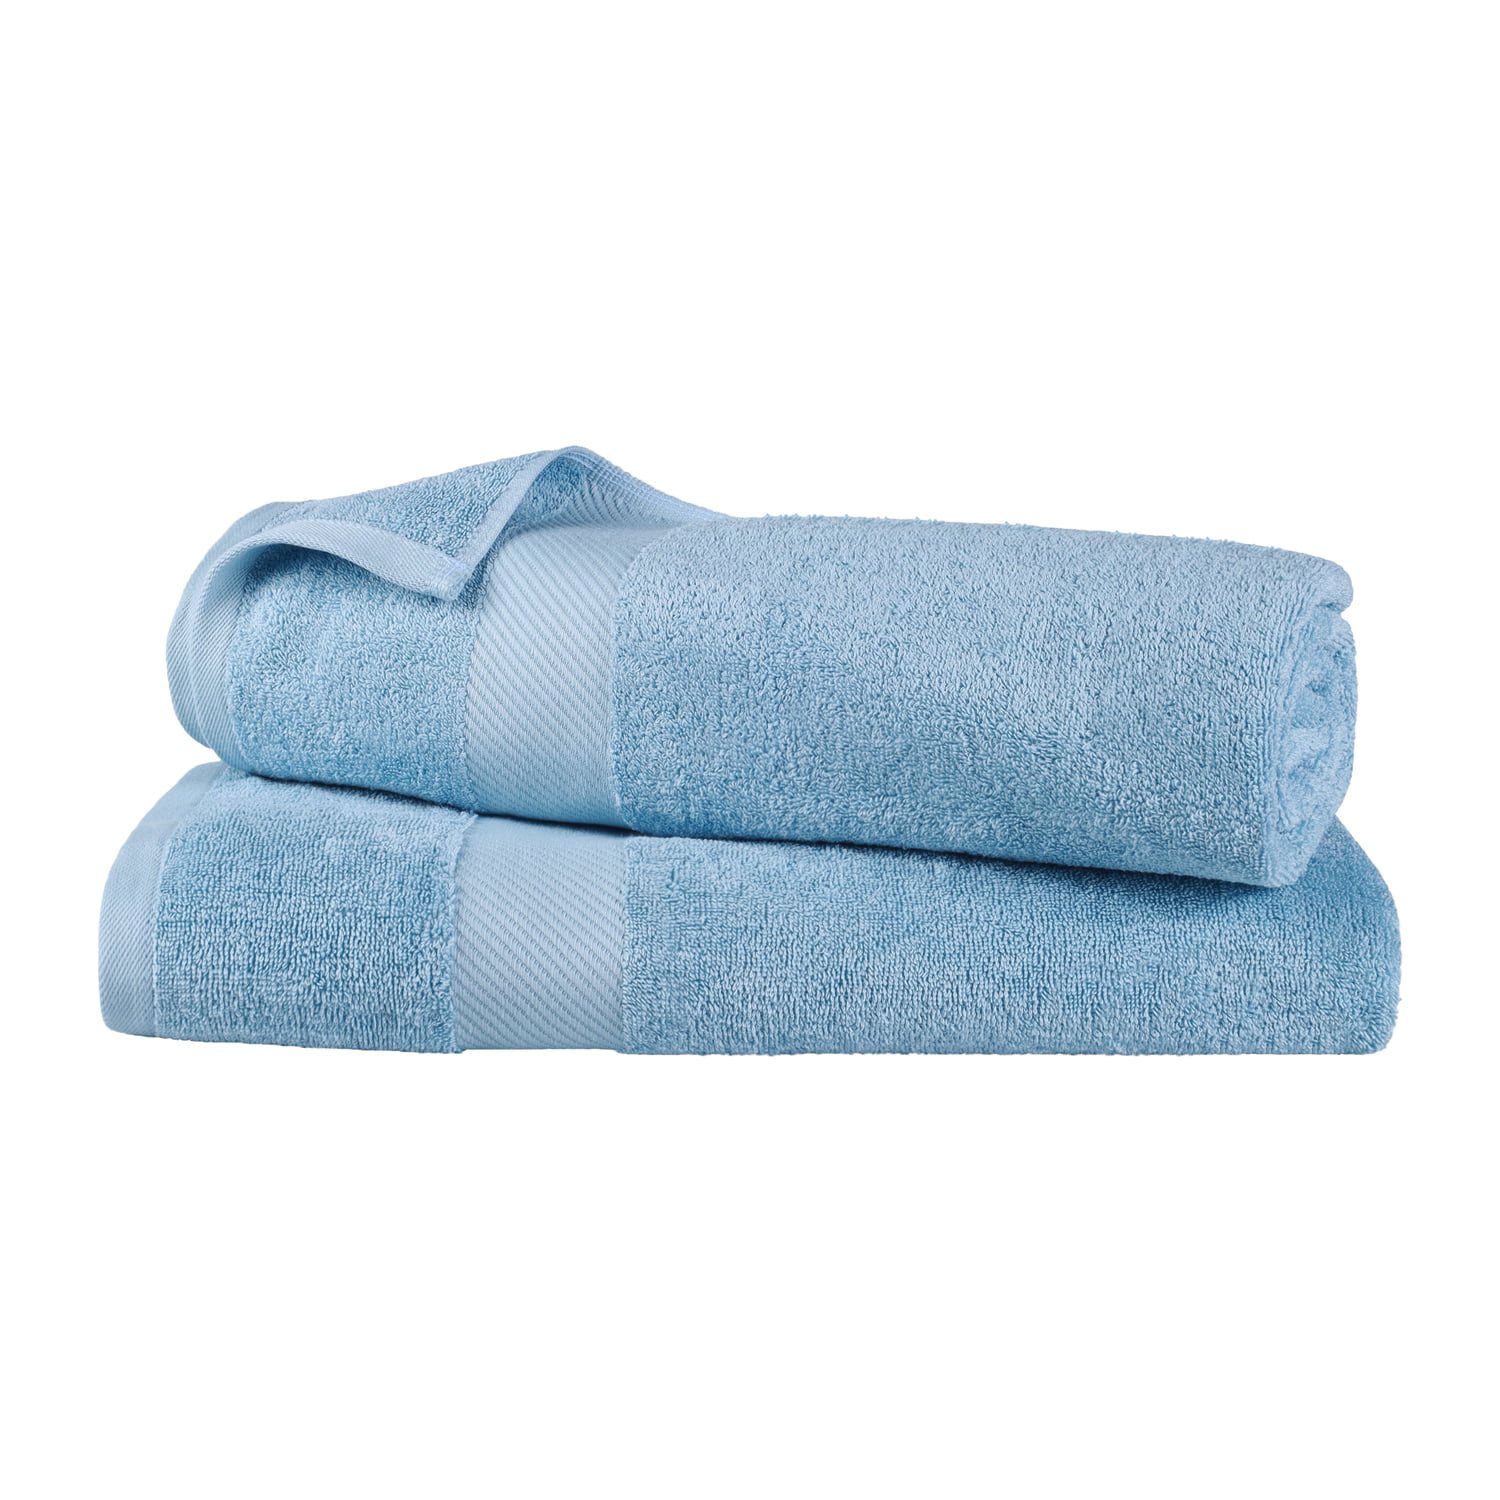 Superior Egyptian Cotton Towel Set 4 Bath 4 Face Towels Winter Blue 4 Hand